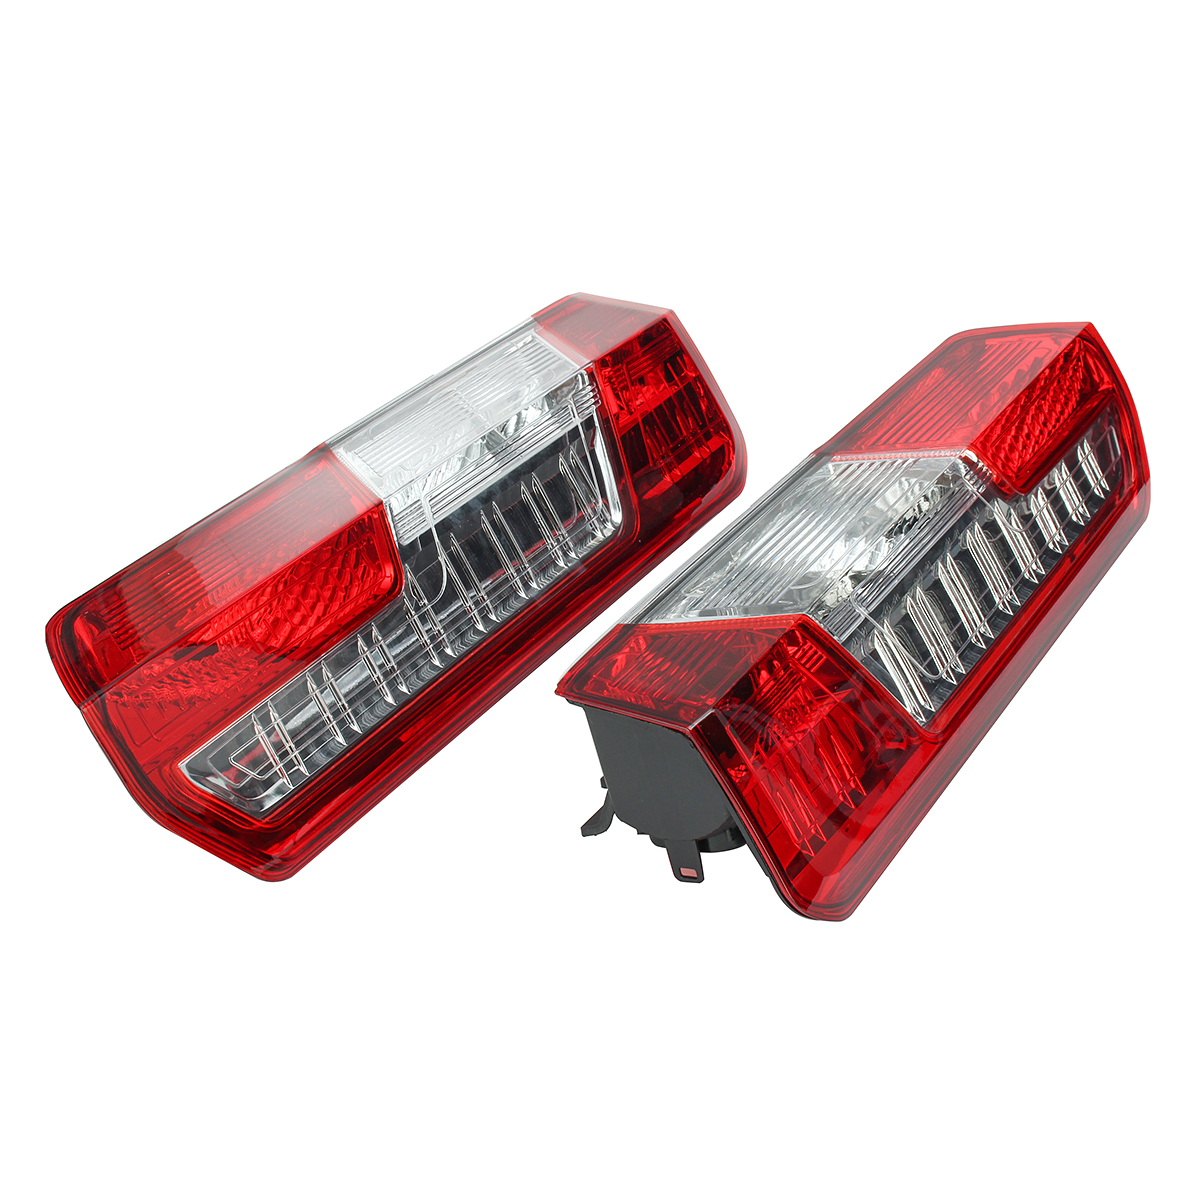 

Car Rear Tail Light Red Lamp Lens Left+Right Side for Ford Transit MK8 MKVIII 2014 Onward